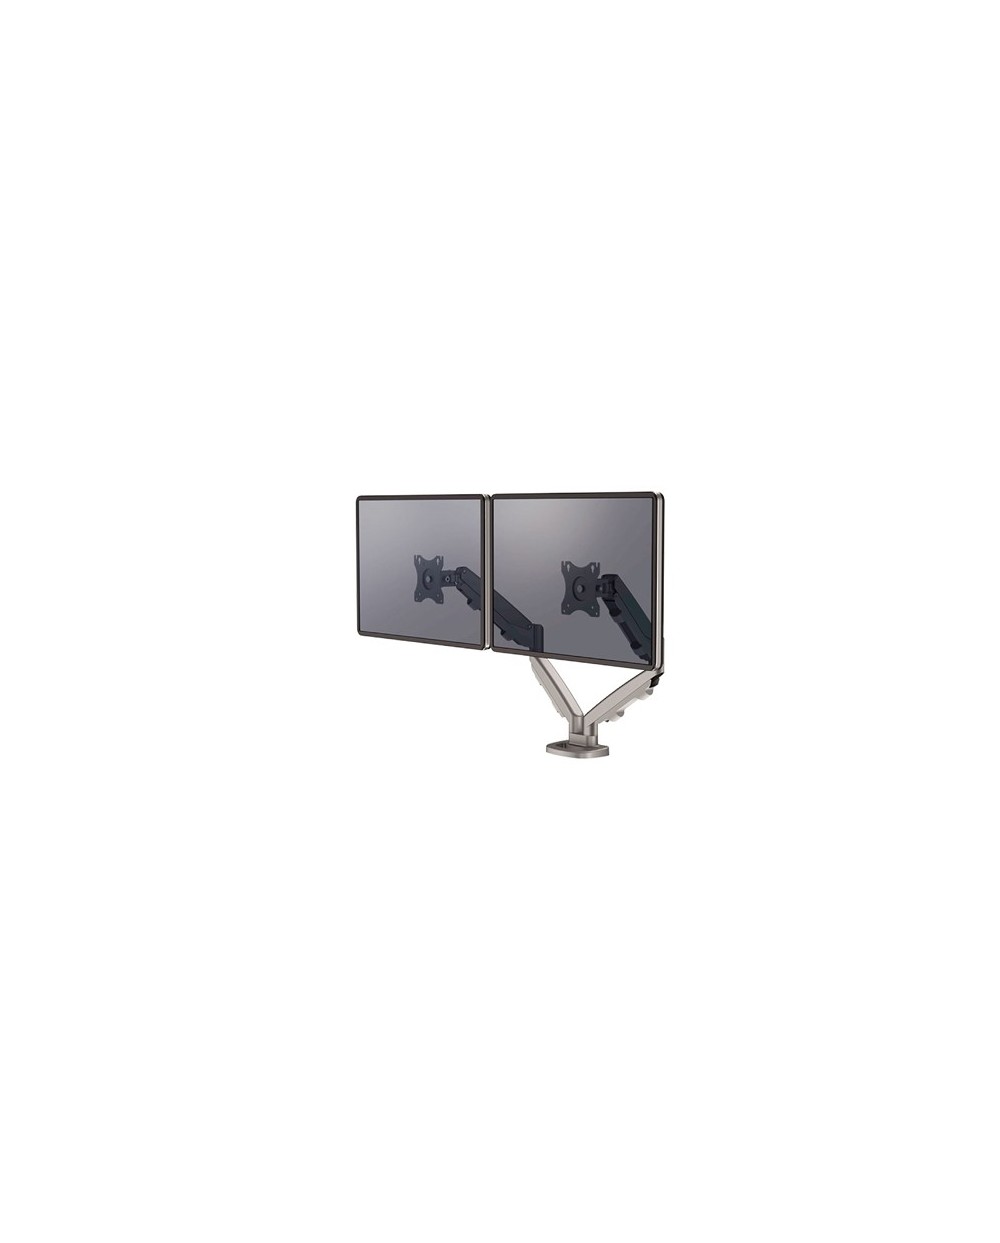 Brazo para monitor fellowes serie eppa ajustable altura 2 pantallas normativa vesa hasta 10 kg plata